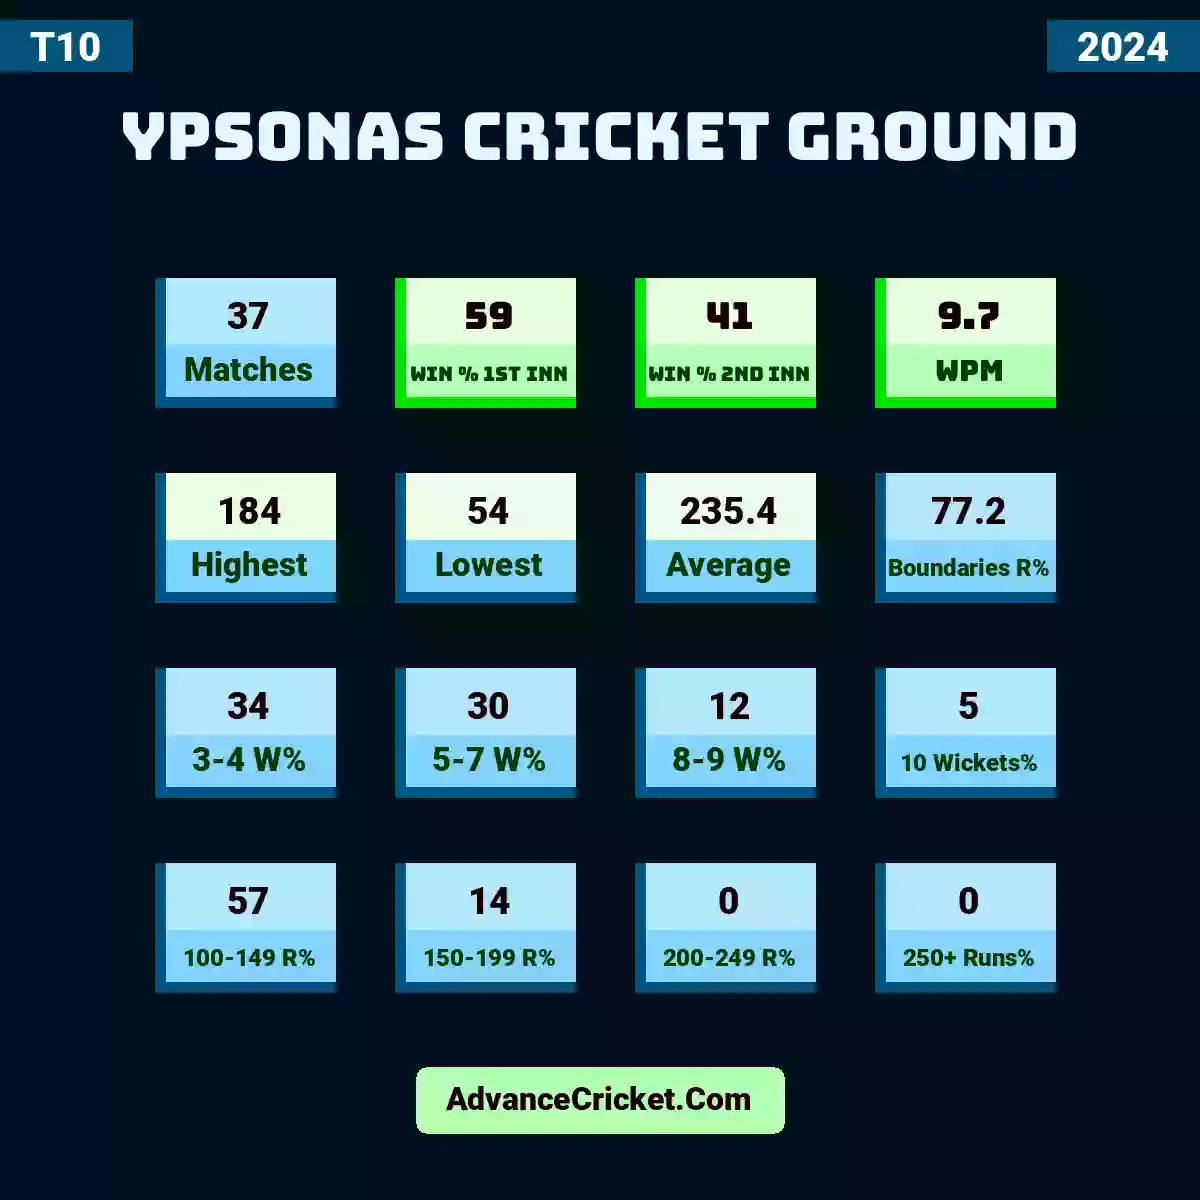 Image showing Ypsonas Cricket Ground with Matches: 37, Win % 1st Inn: 59, Win % 2nd Inn: 41, WPM: 9.7, Highest: 184, Lowest: 54, Average: 235.4, Boundaries R%: 77.2, 3-4 W%: 34, 5-7 W%: 30, 8-9 W%: 12, 10 Wickets%: 5, 100-149 R%: 57, 150-199 R%: 14, 200-249 R%: 0, 250+ Runs%: 0.